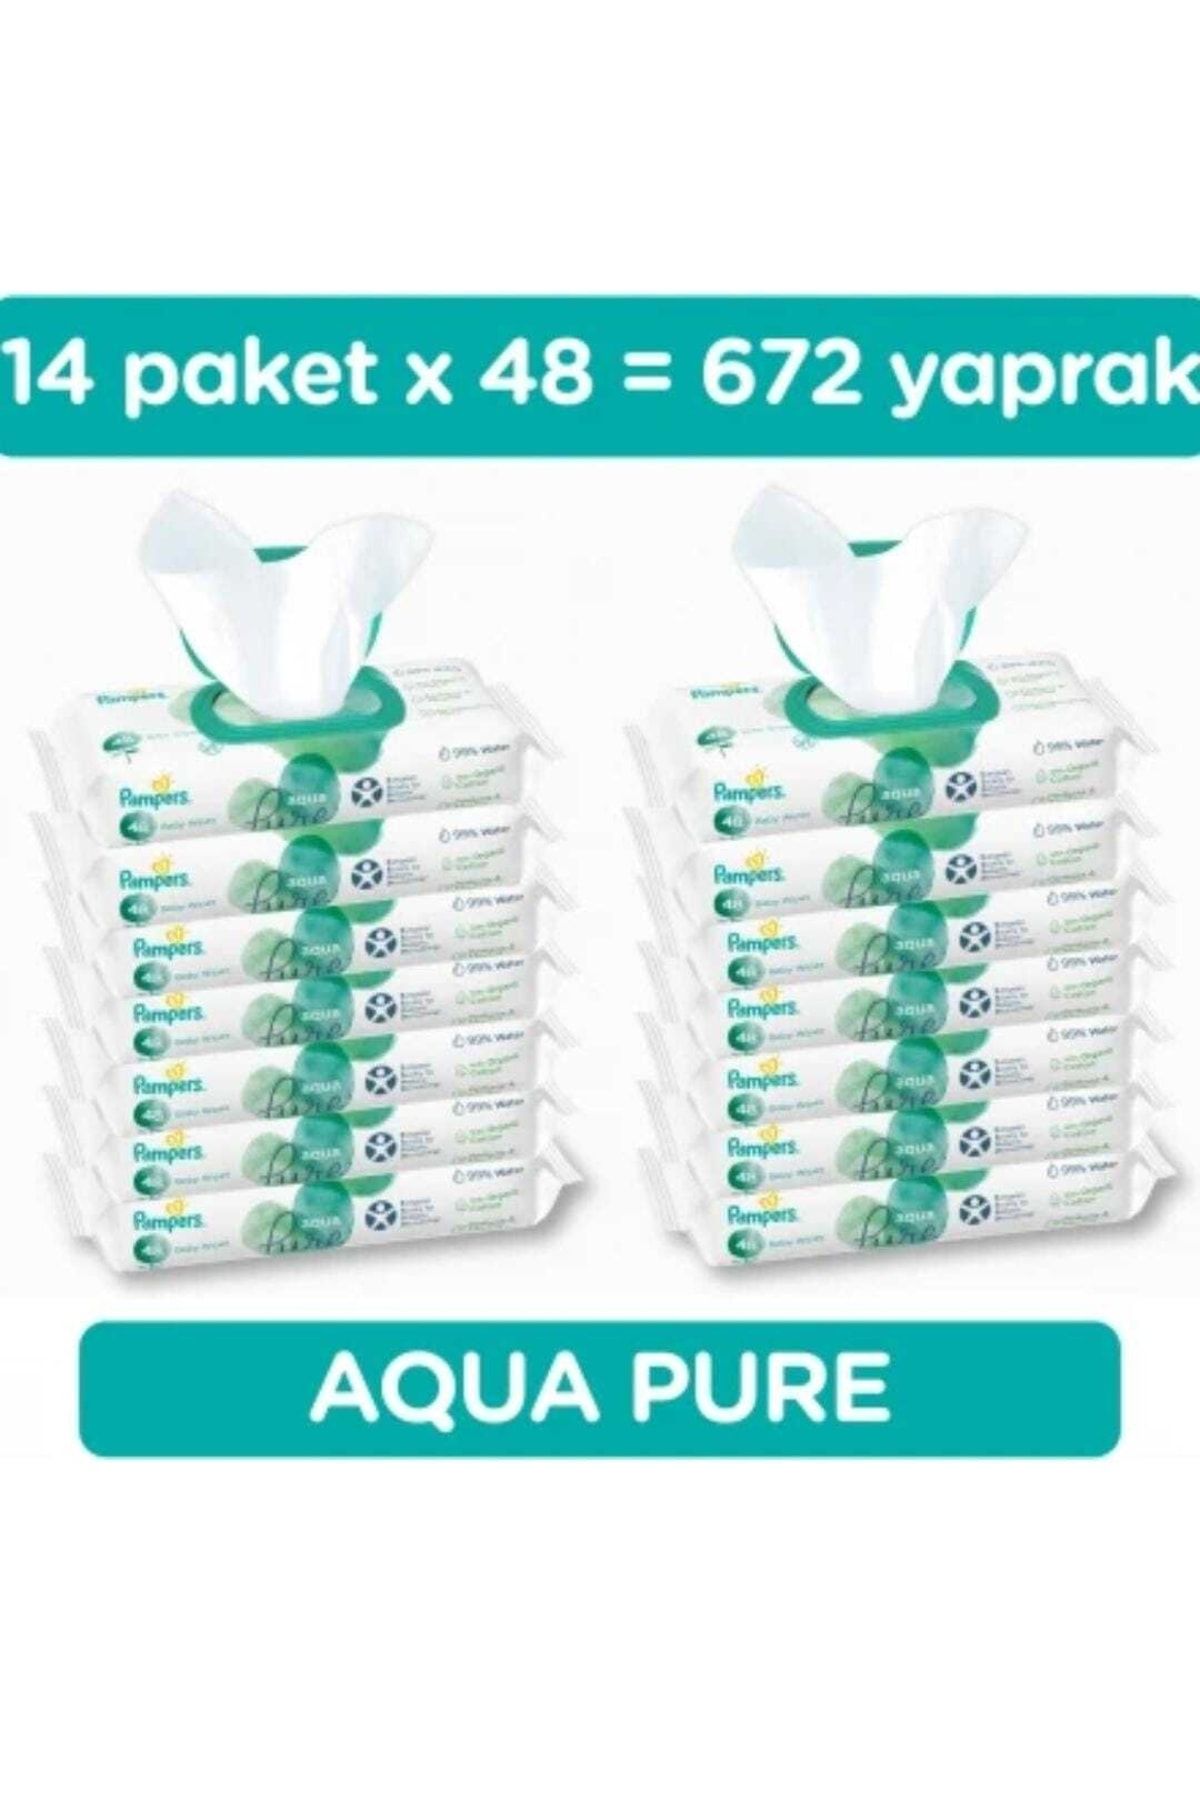 Prima Aqua Pure Islak Havlu 14 Paket 672 Yaprak